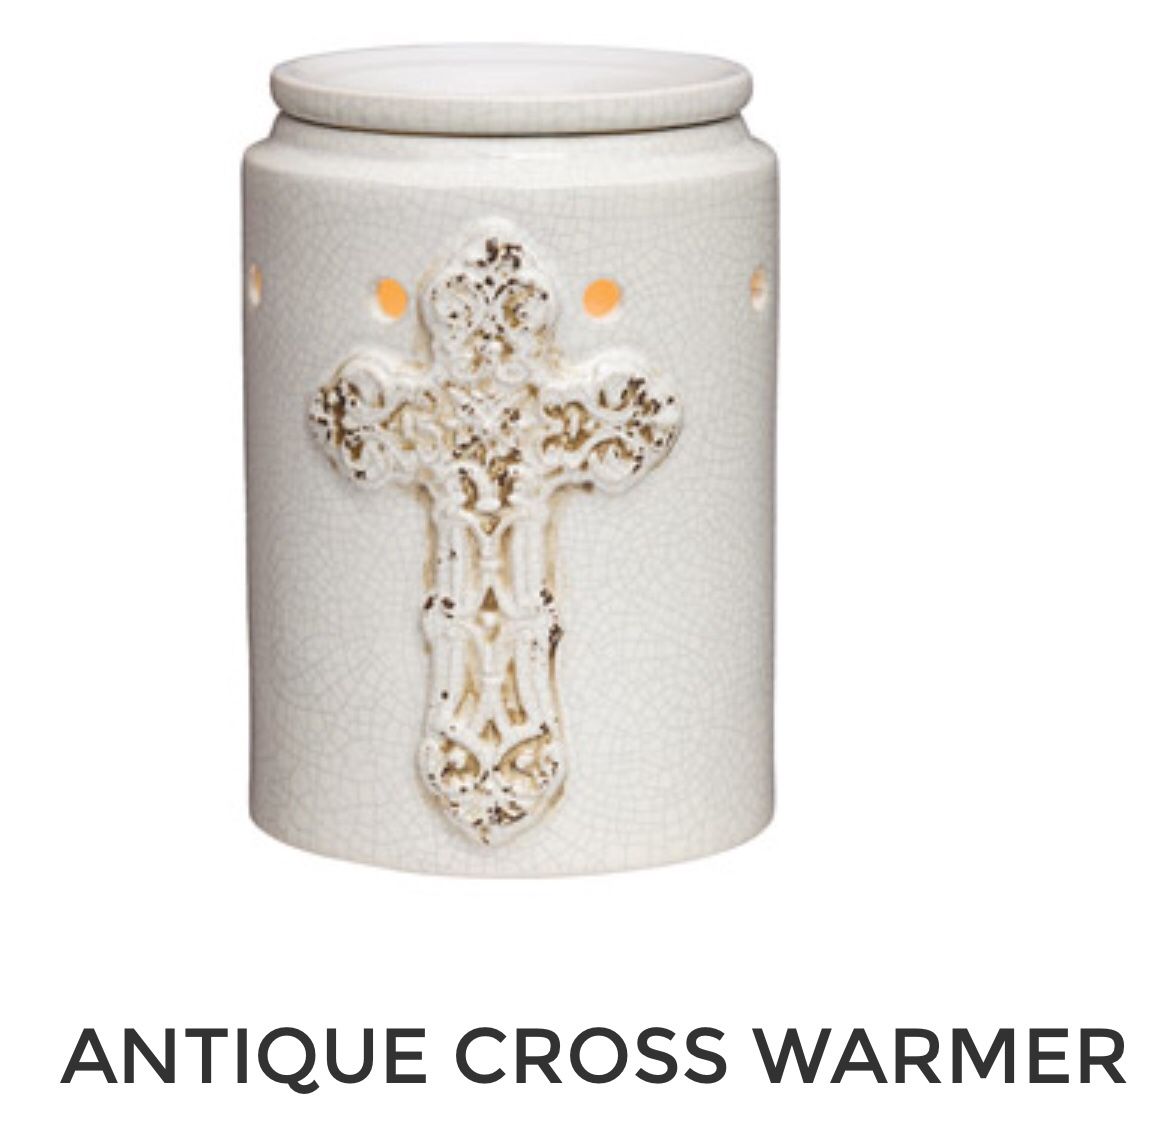 Scentsy Antique Cross Warmer